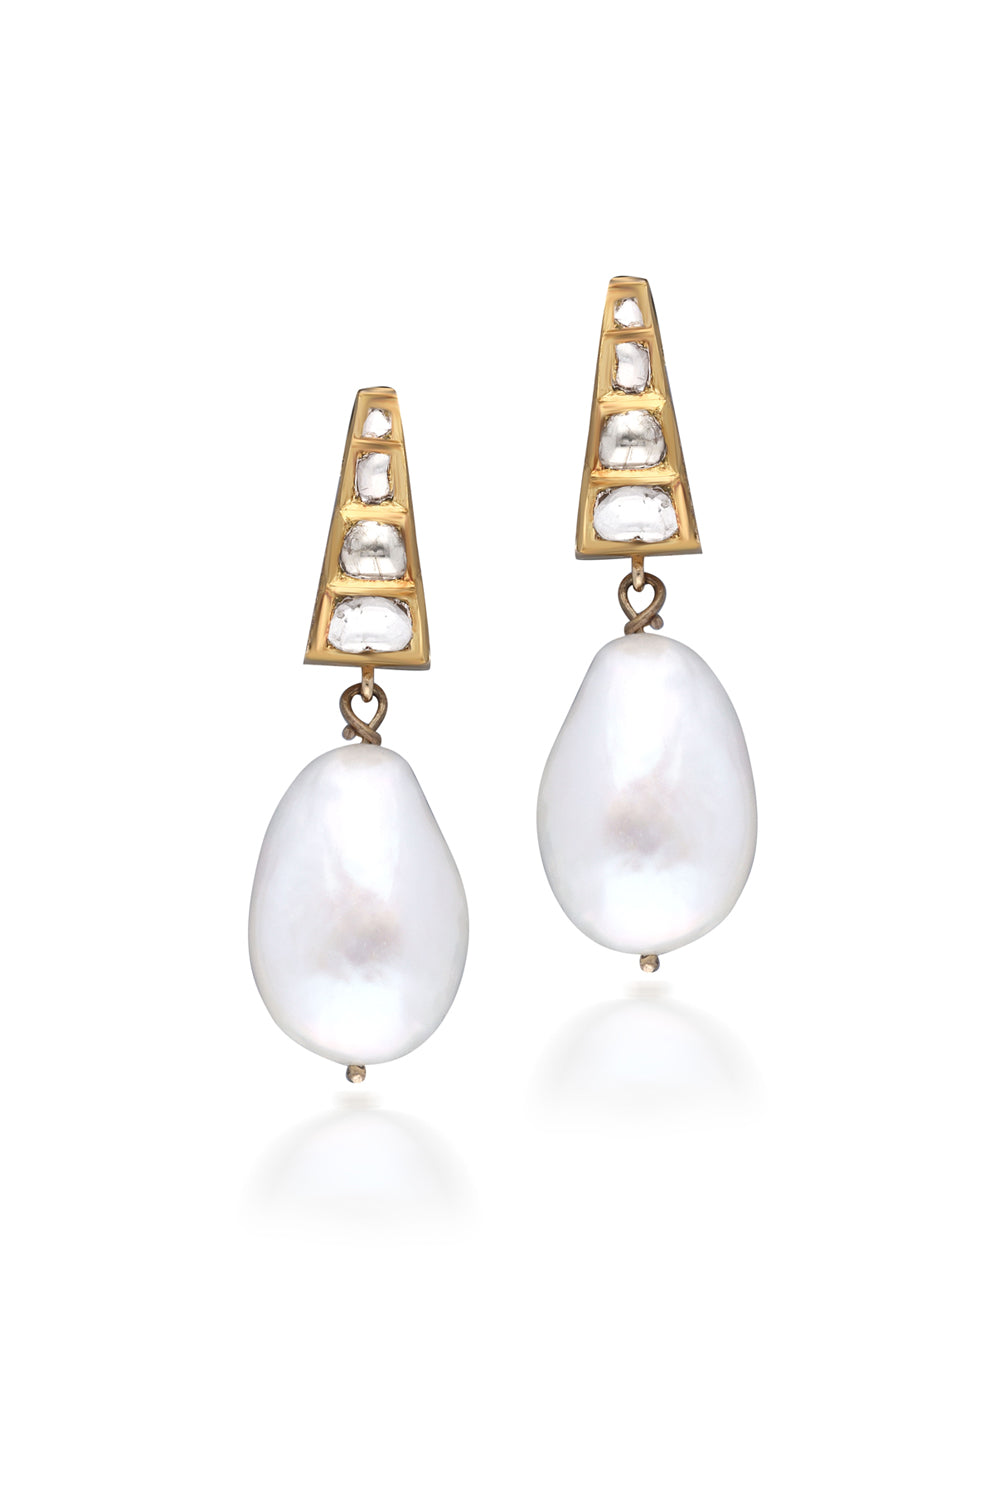 Uncut Diamond Baroque Pearl Earrings